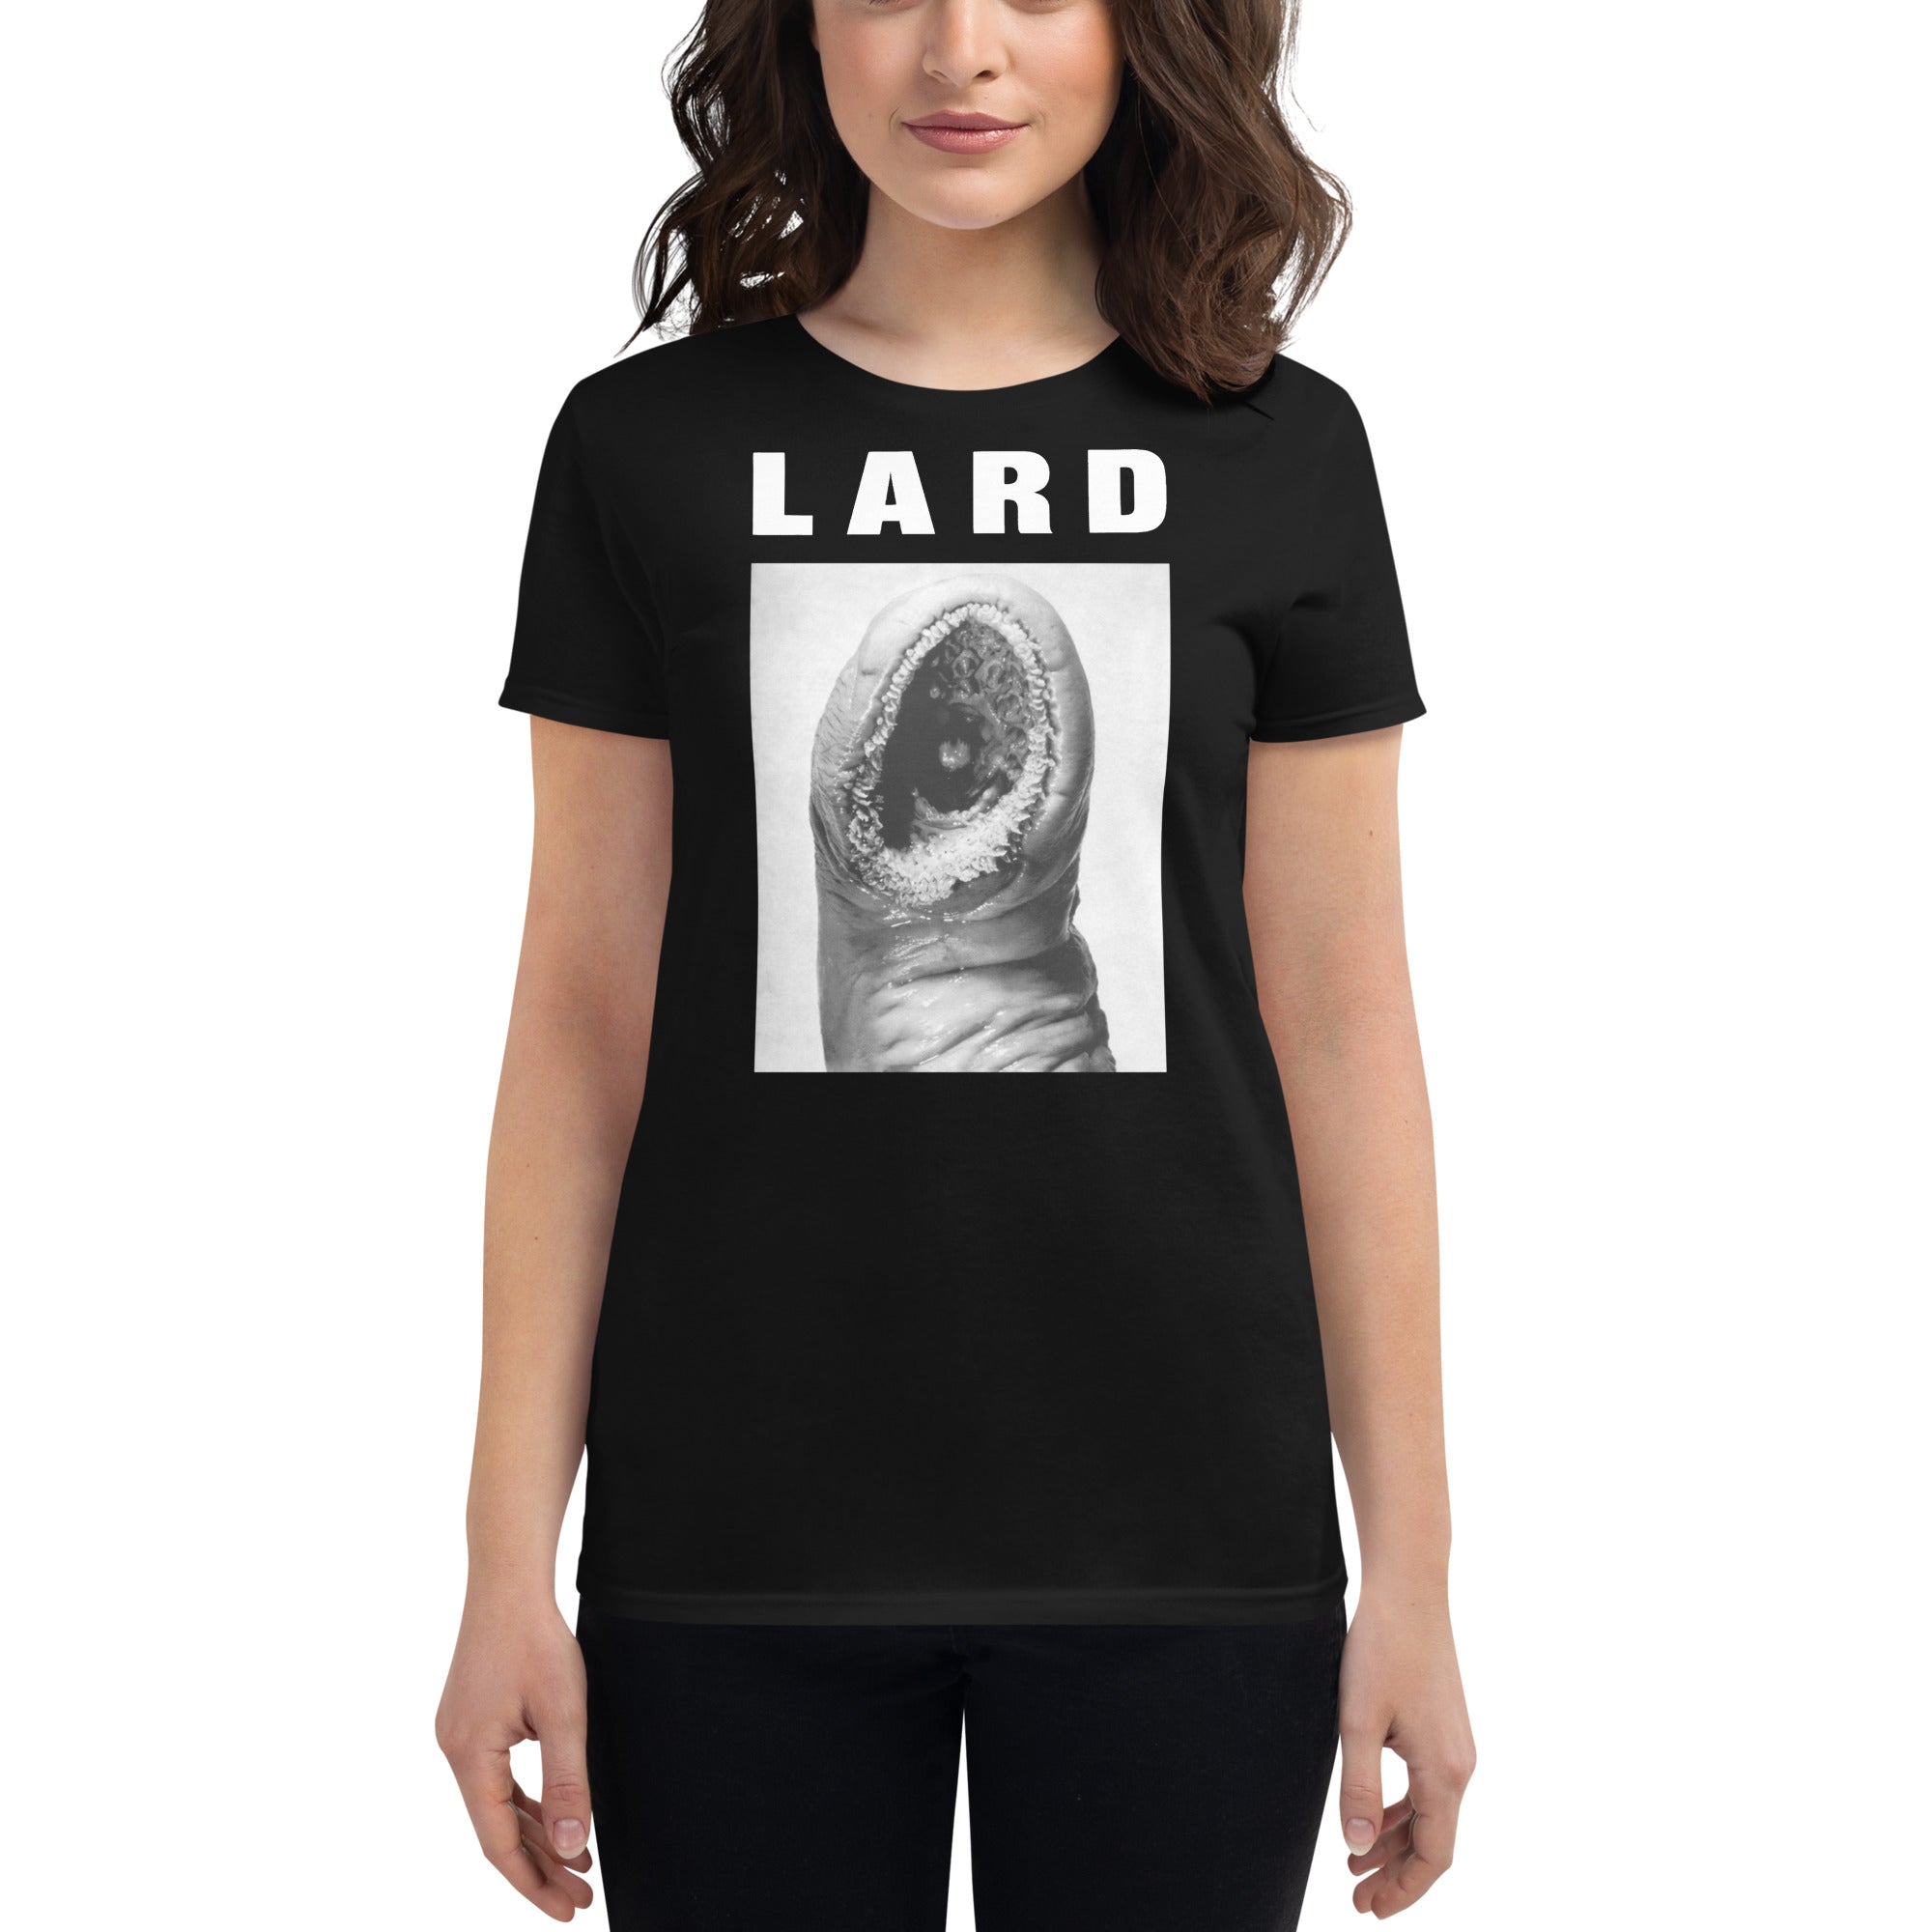 LARD "The Power Of Lard" Femme Black T-Shirt